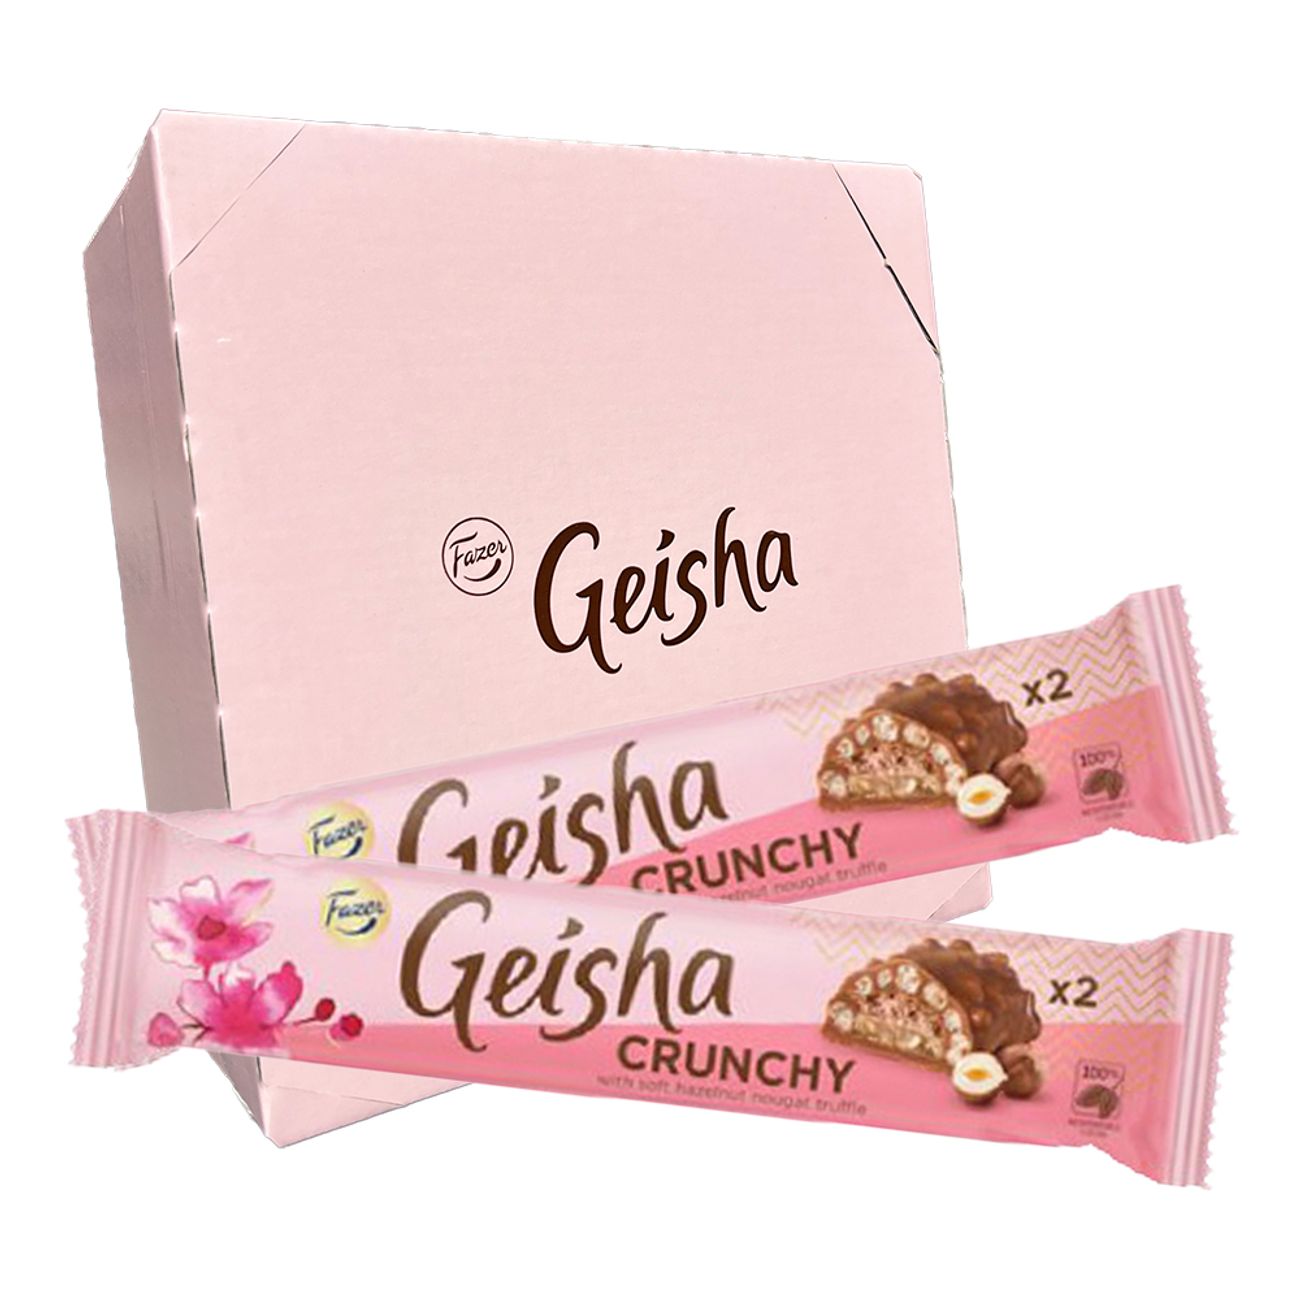 geisha-crunchy-dubbel-storpack-102952-1